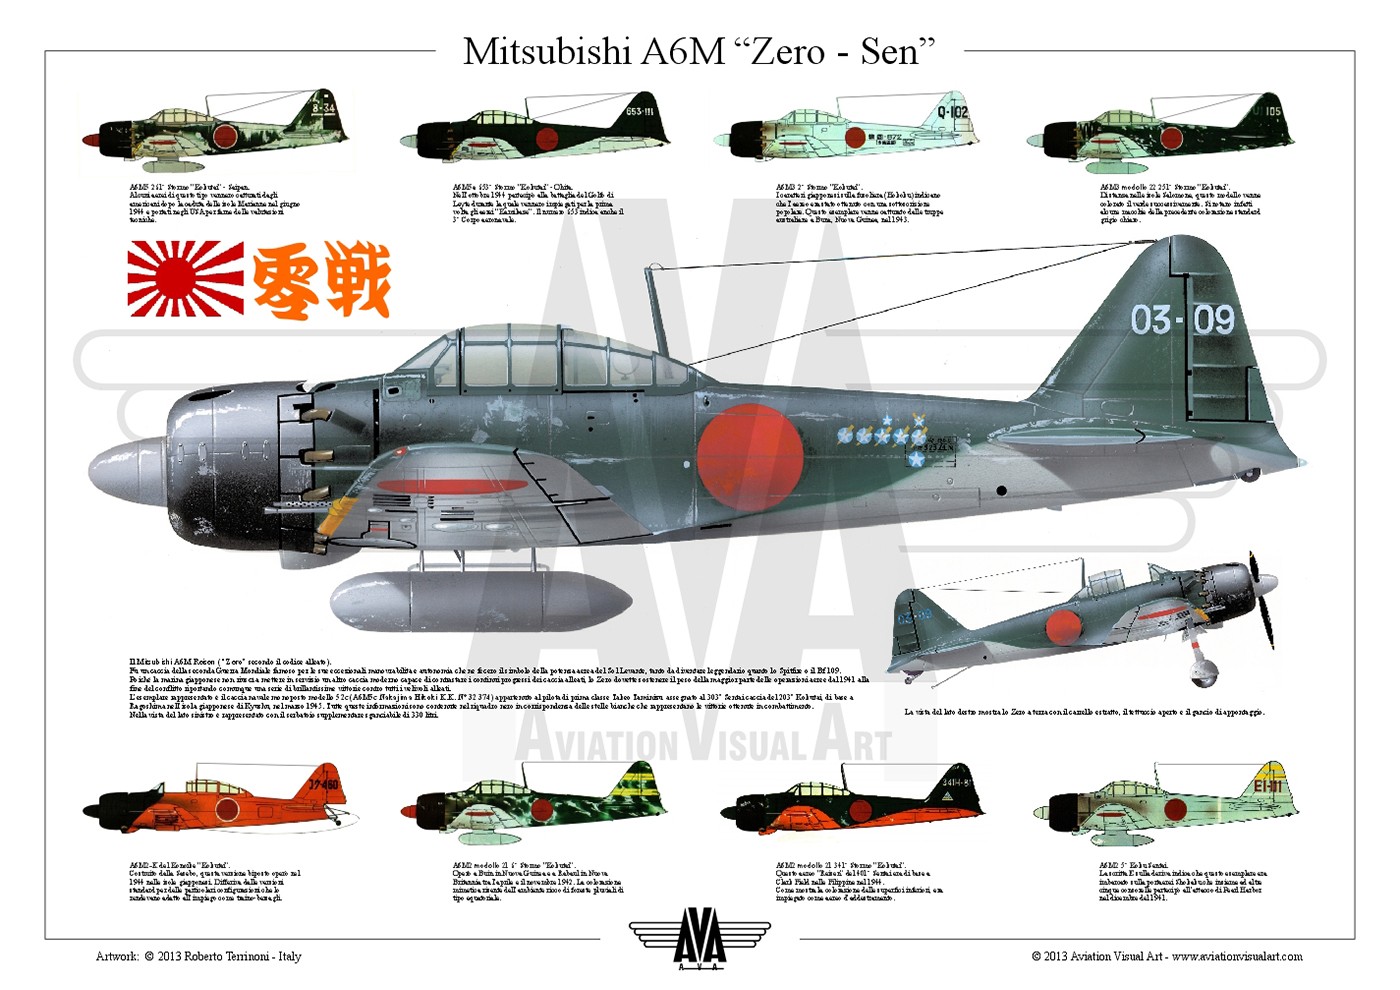 Amazing Mitsubishi A6M Zero Pictures & Backgrounds